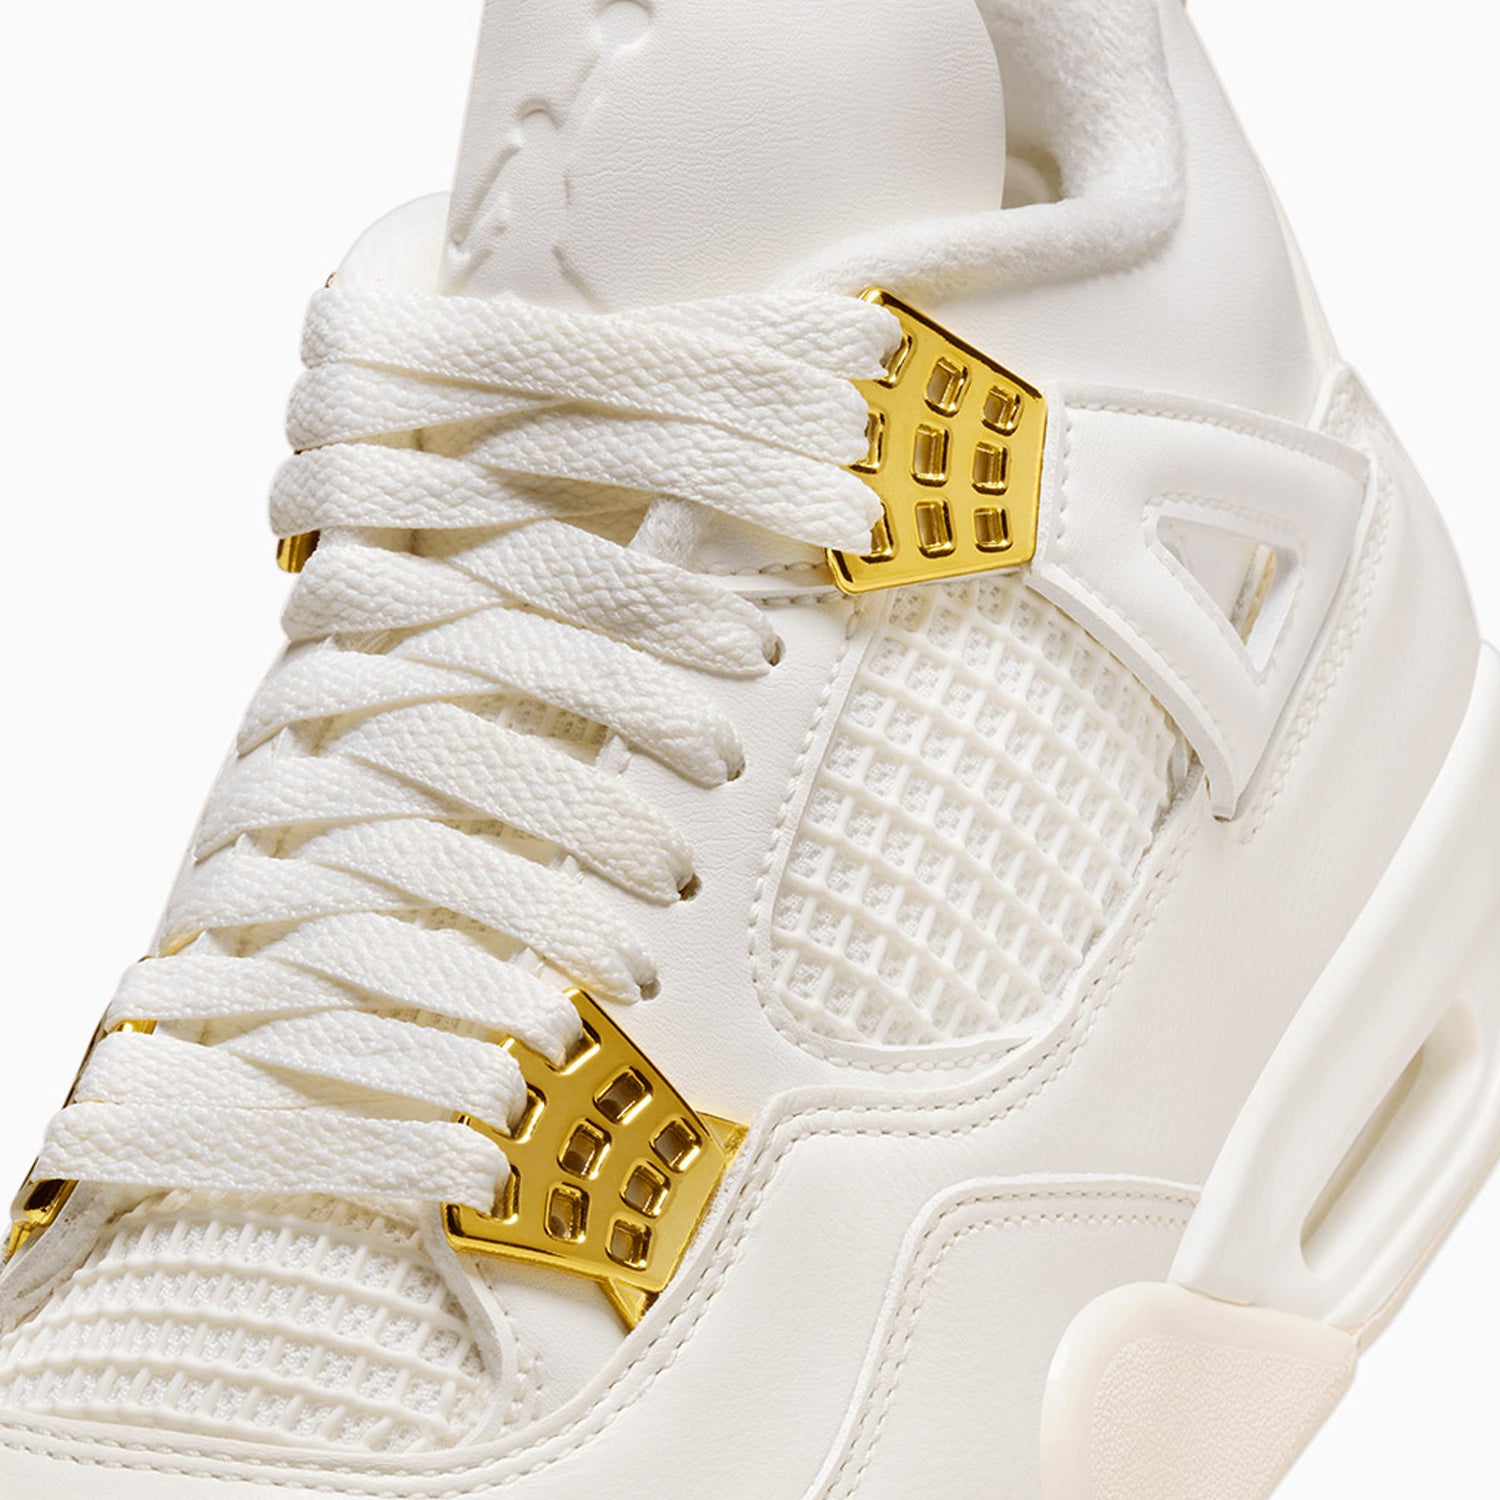 womens-air-jordan-4-retro-metallic-gold-shoes-aq9129-170